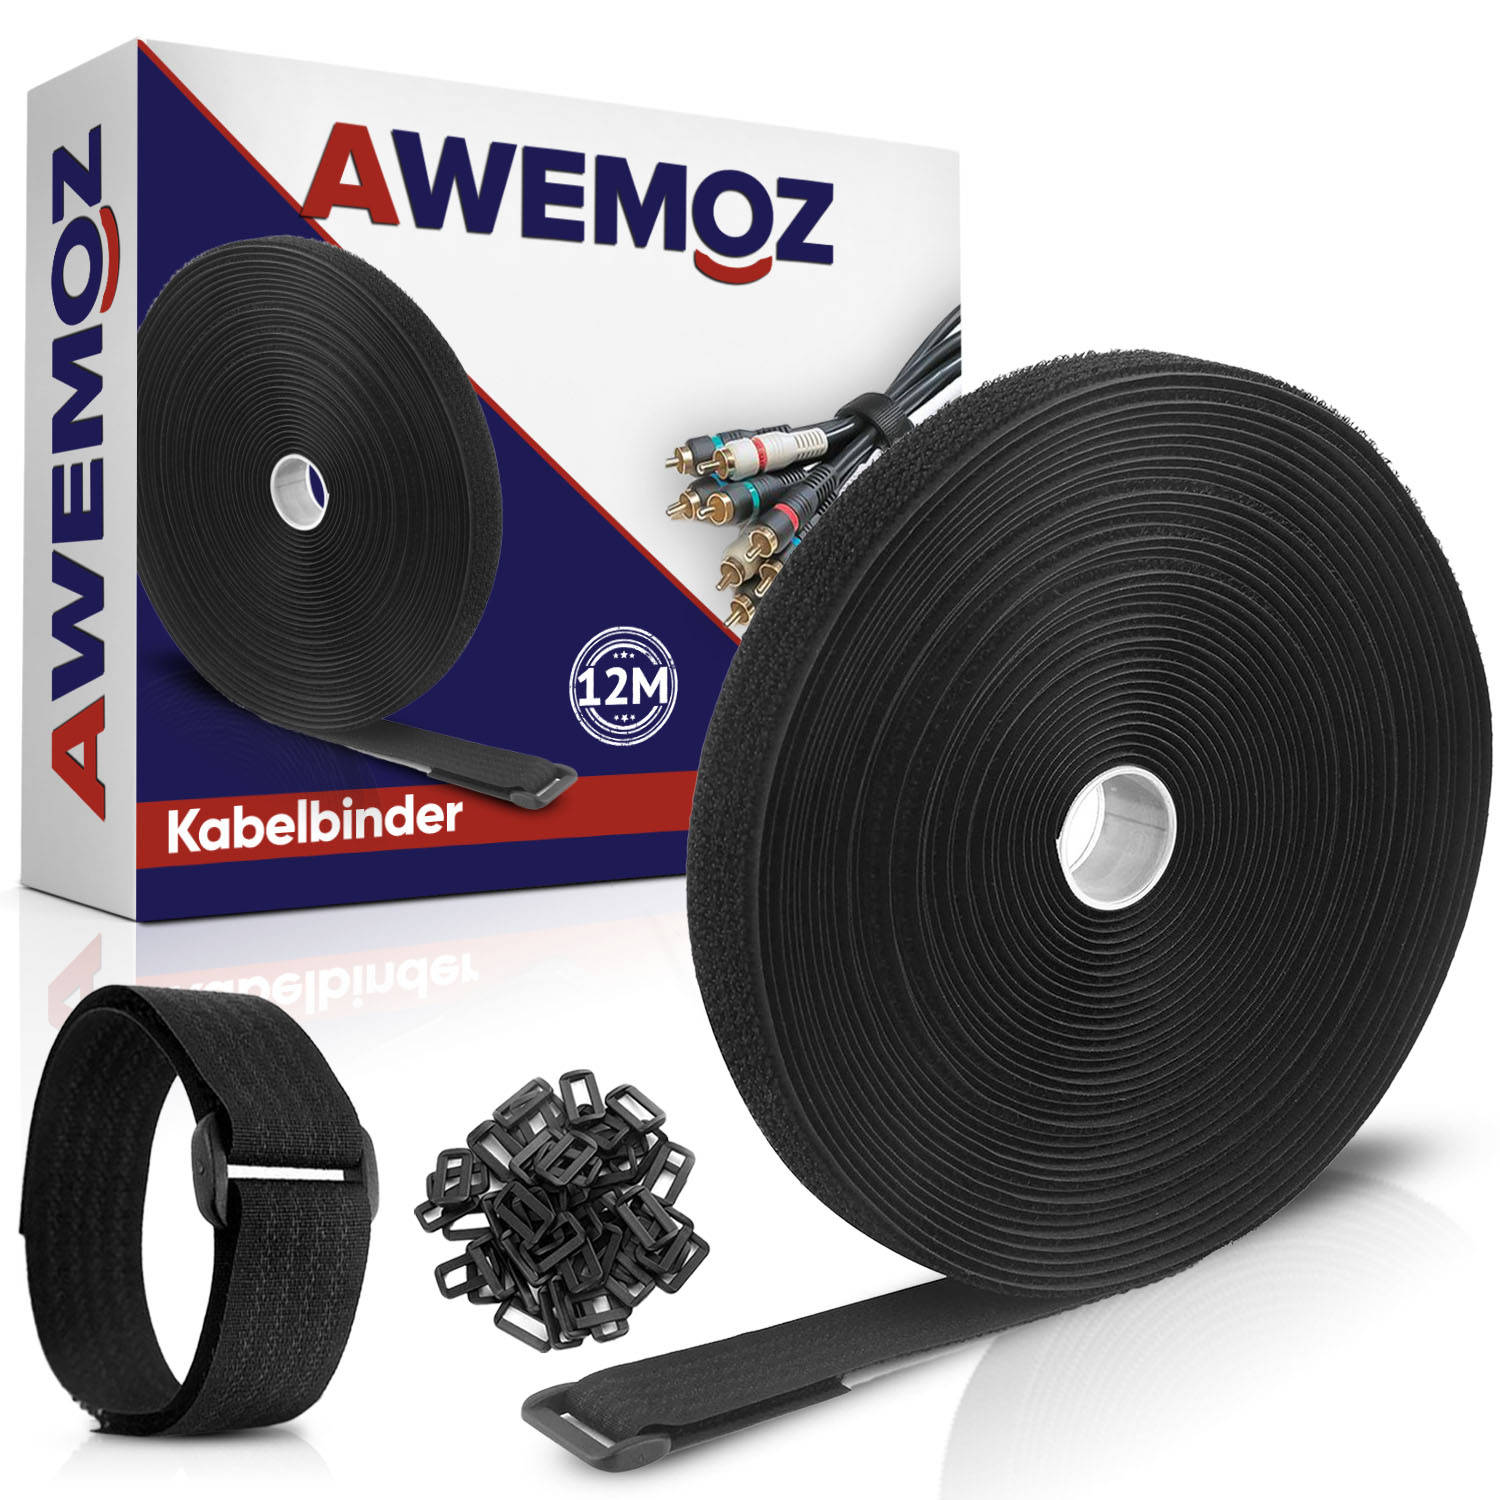 AWEMOZ Velcro Kabelbinders 12 Meter Lang 2 CM breed Kabelsbinders Klittenband Zwarte Kabel Organiser